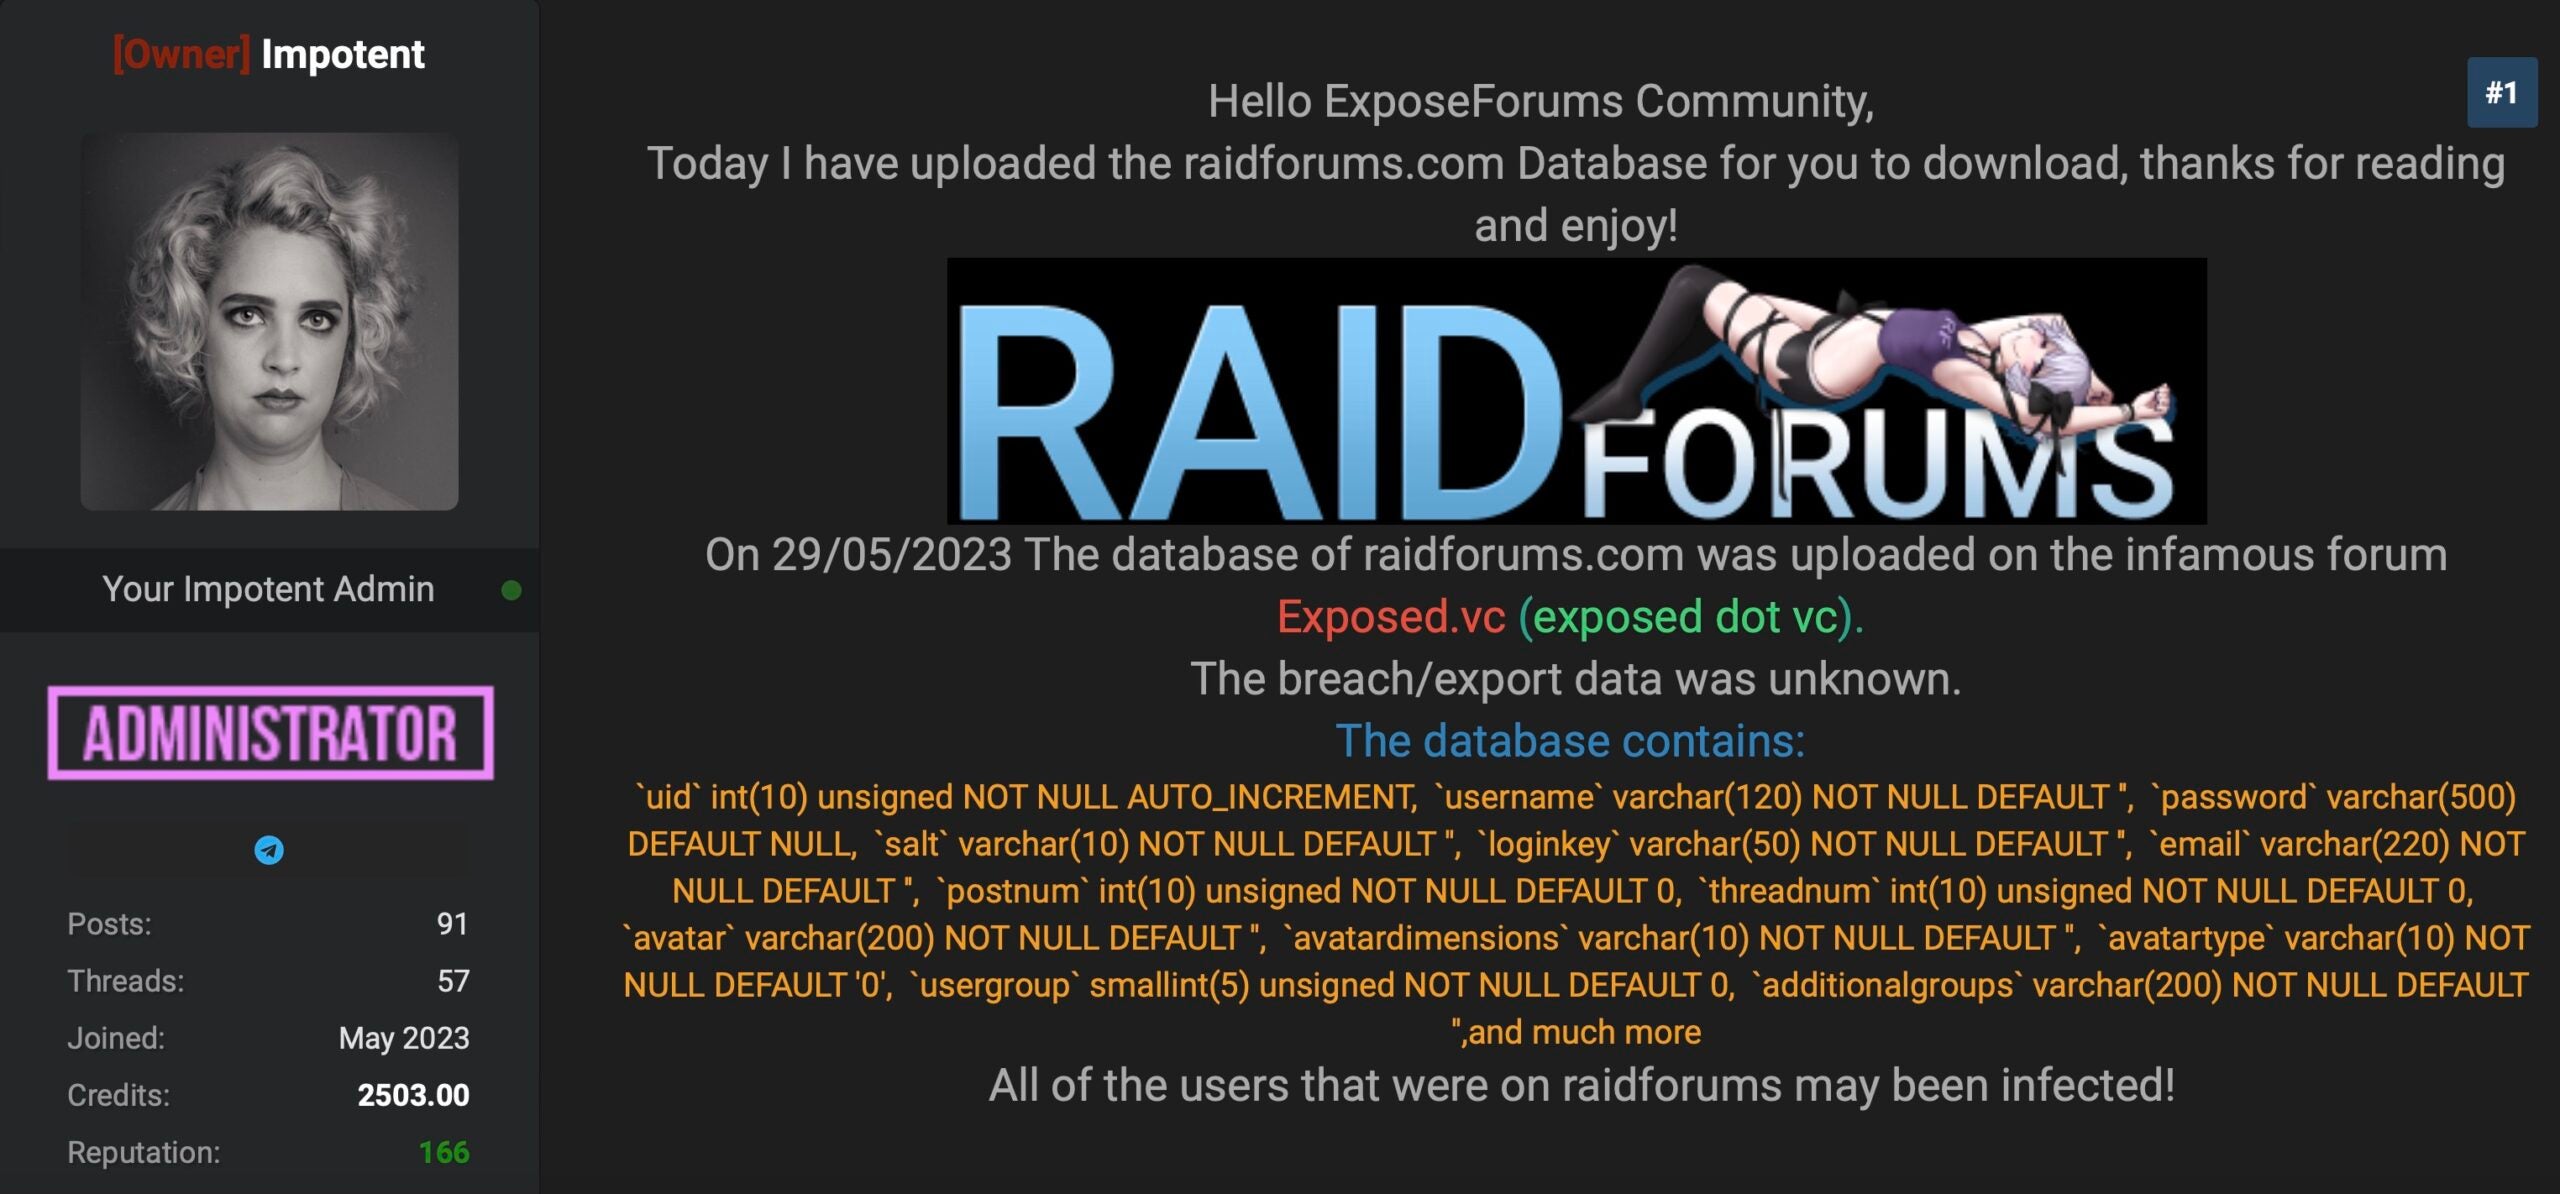 Massive data breach exposes RaidForums members - Cybersecurity Threat Alert.